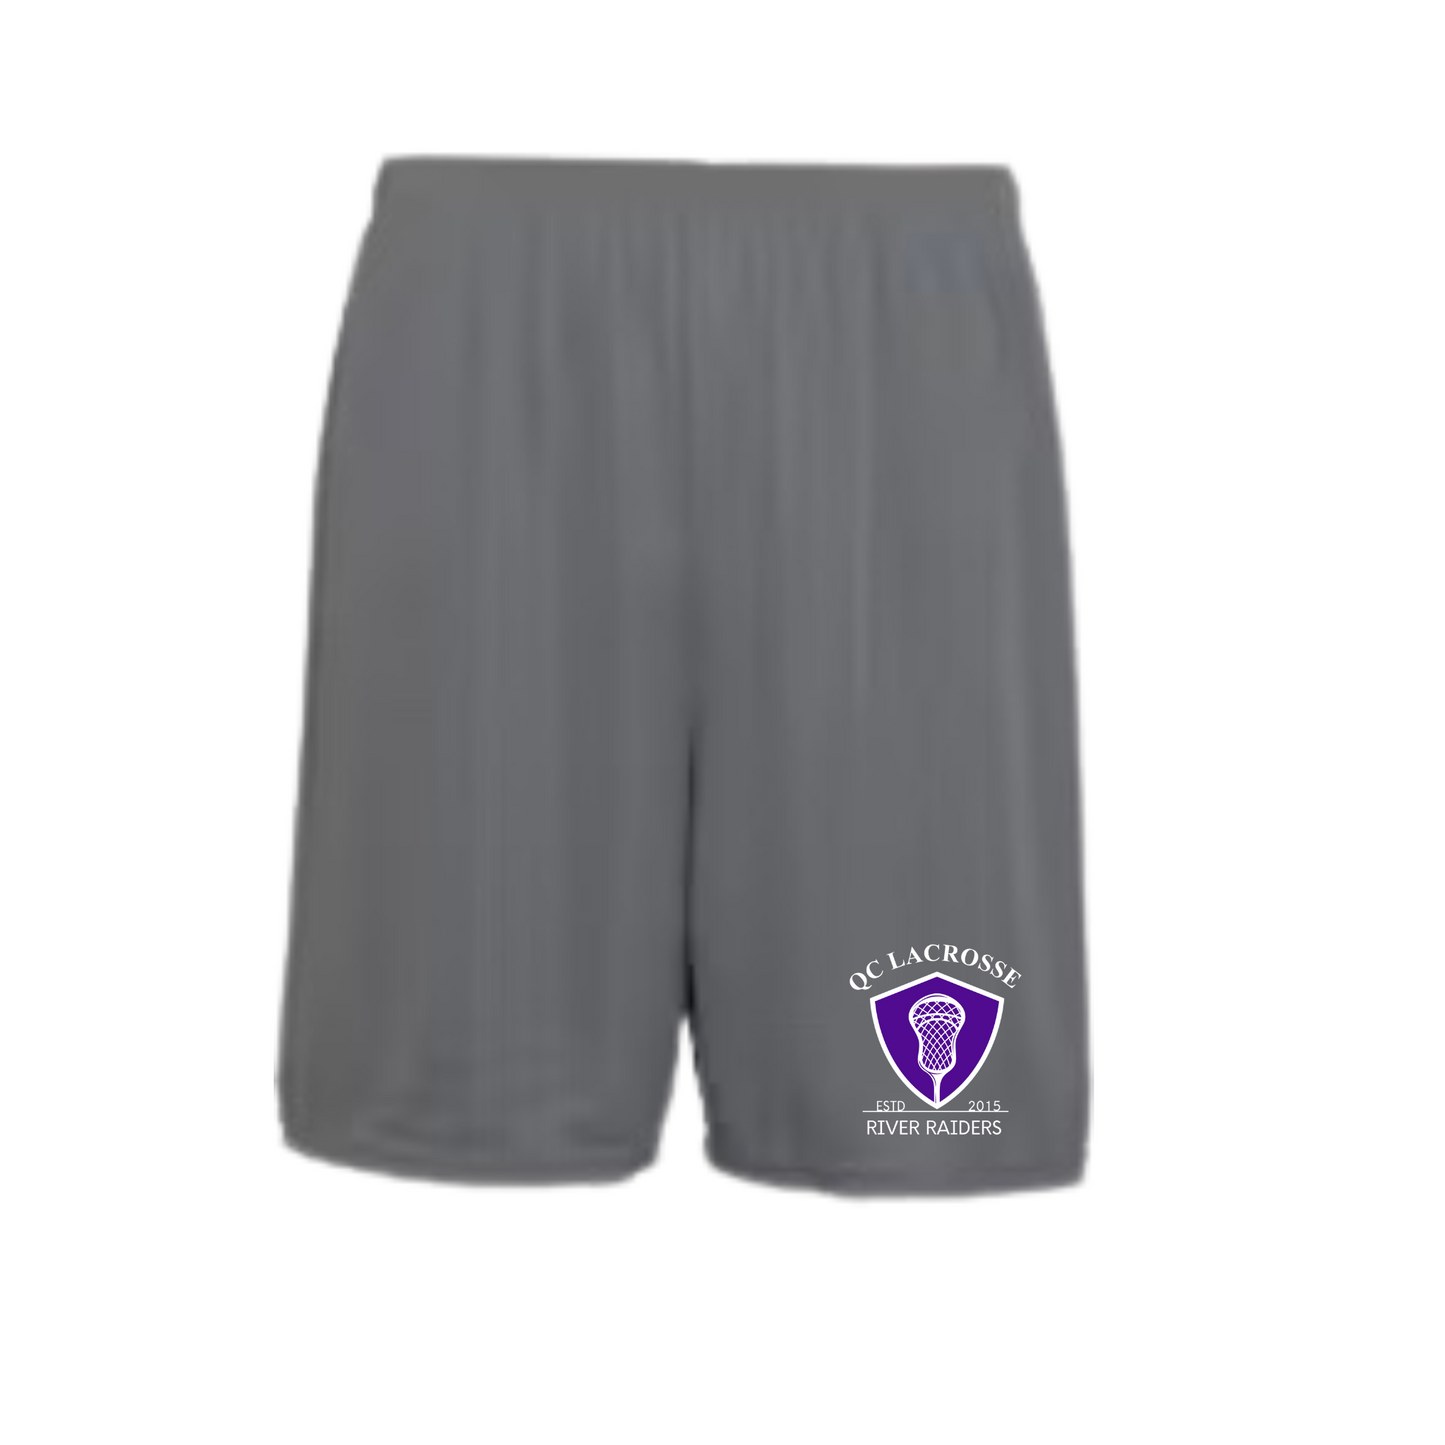 QC Lacrosse Athletic Shorts